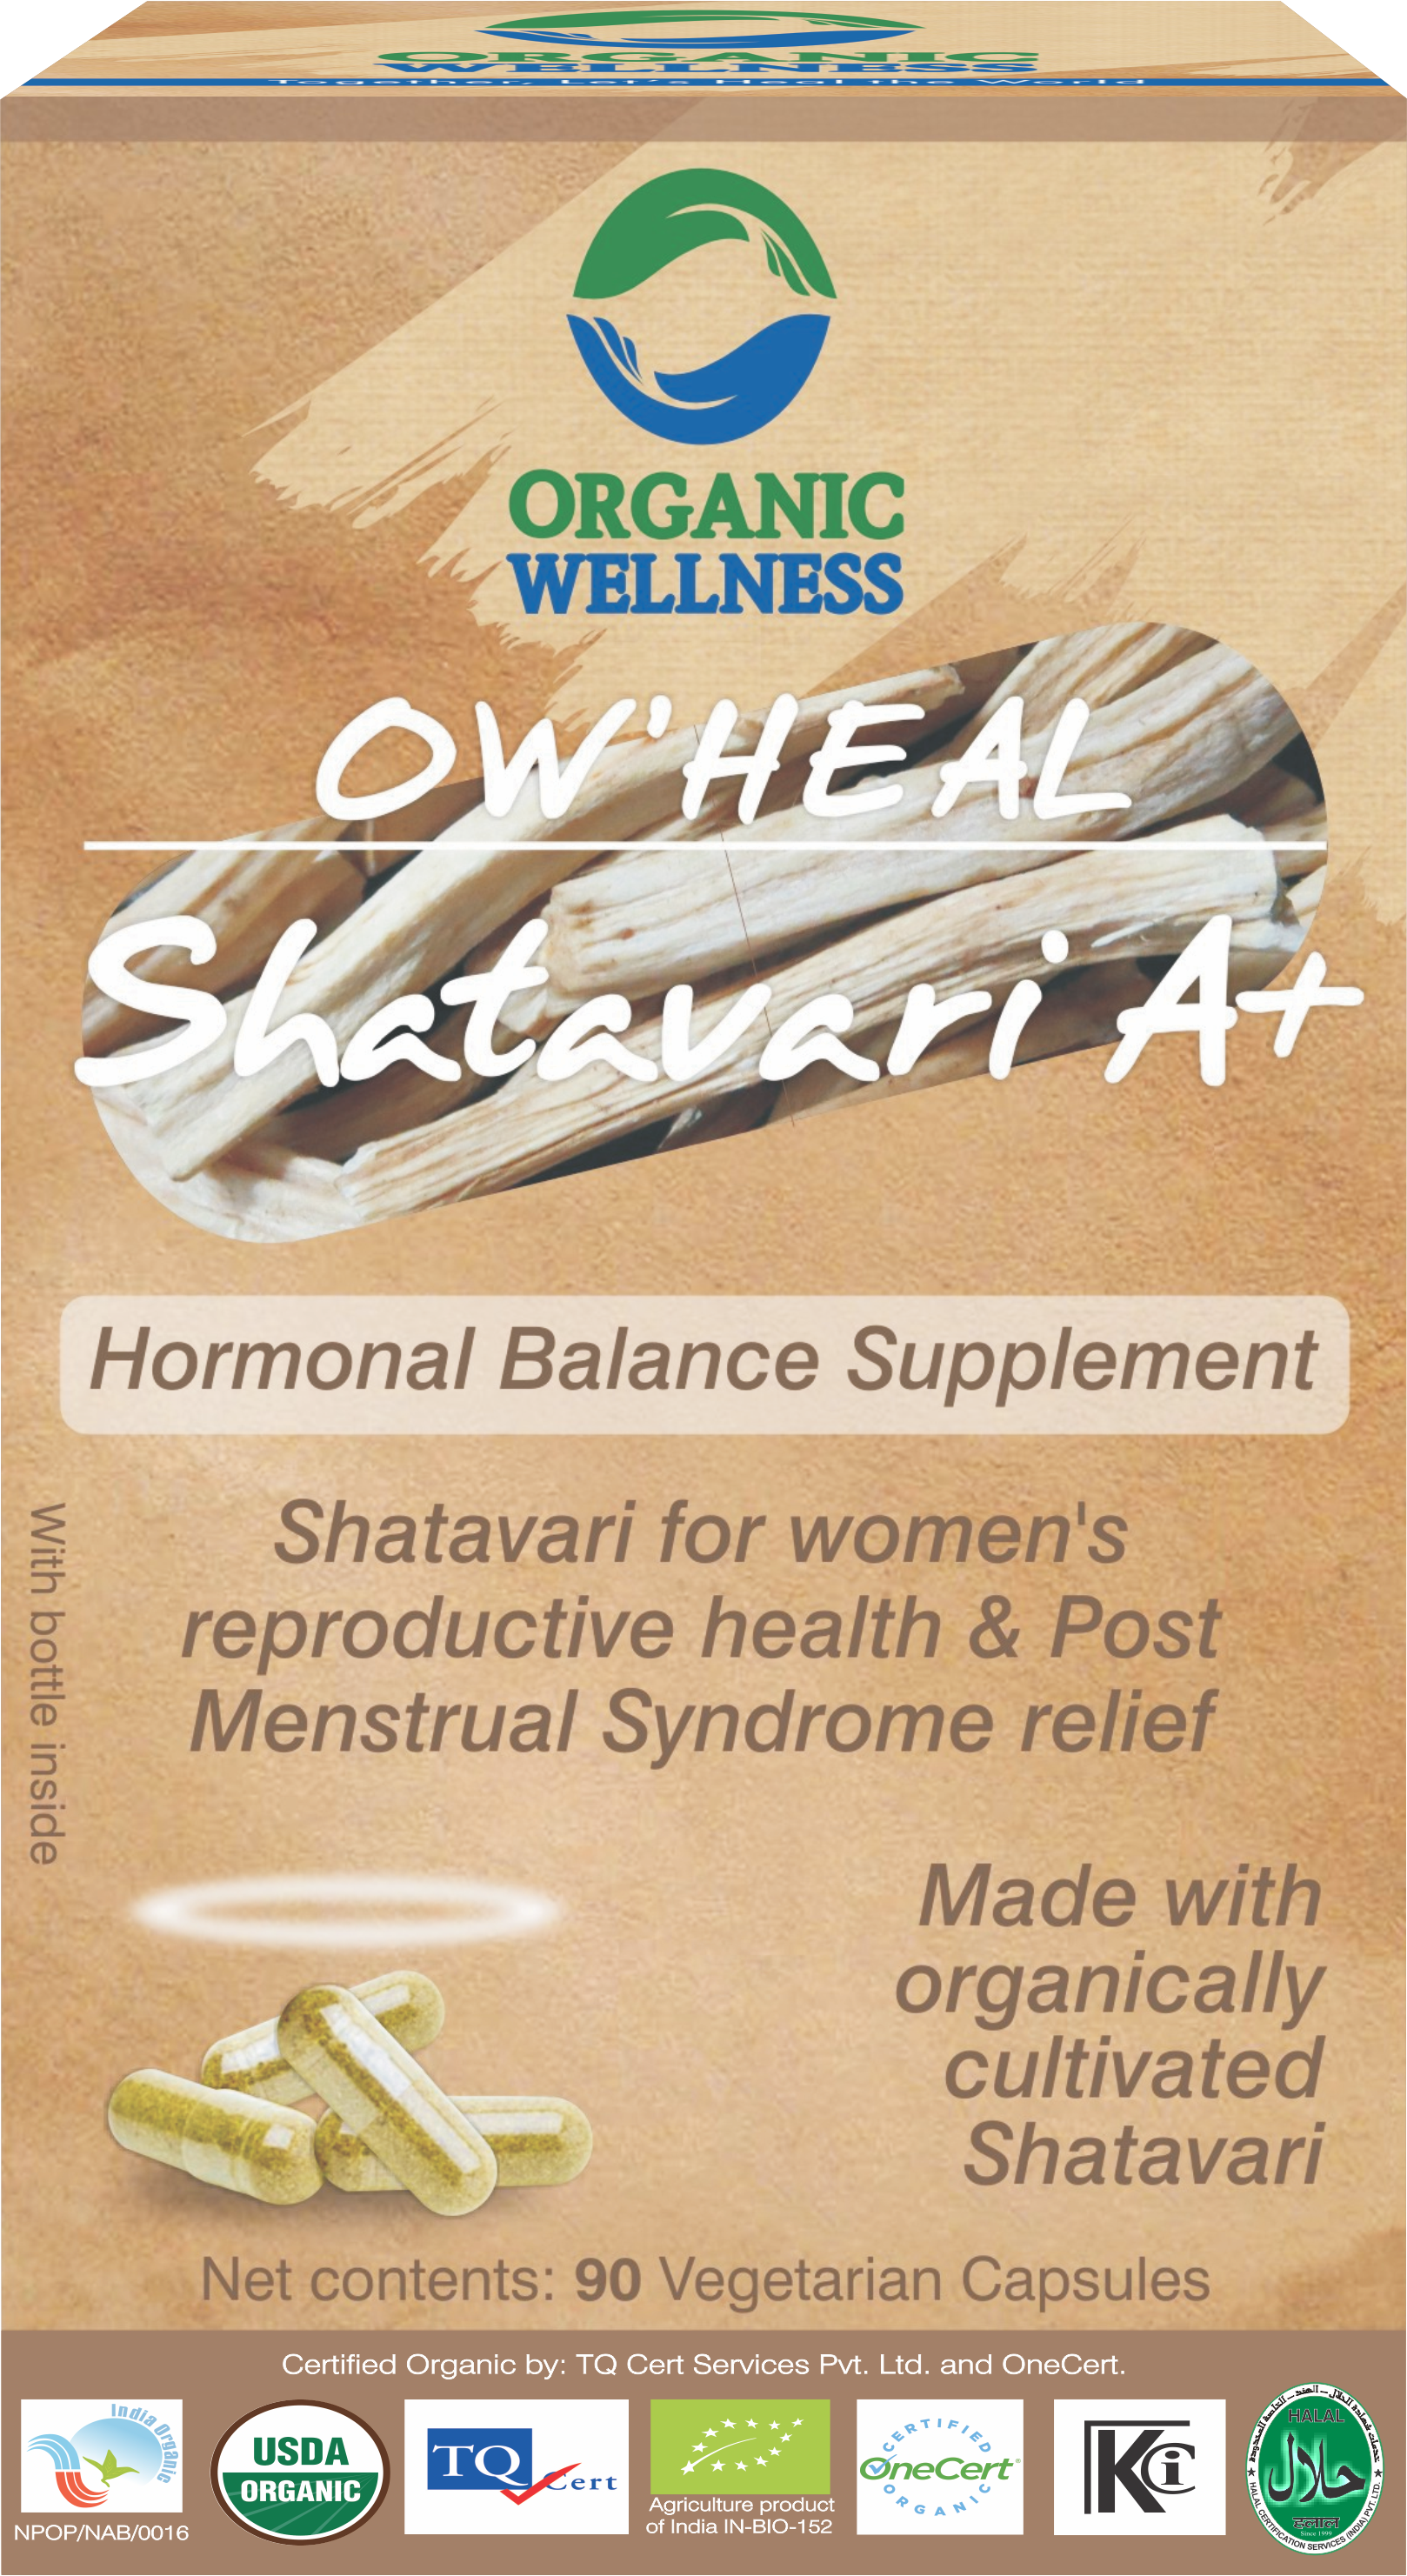 Buy Organic Wellness Heal Shatavari A Plus Capsule at Best Price Online